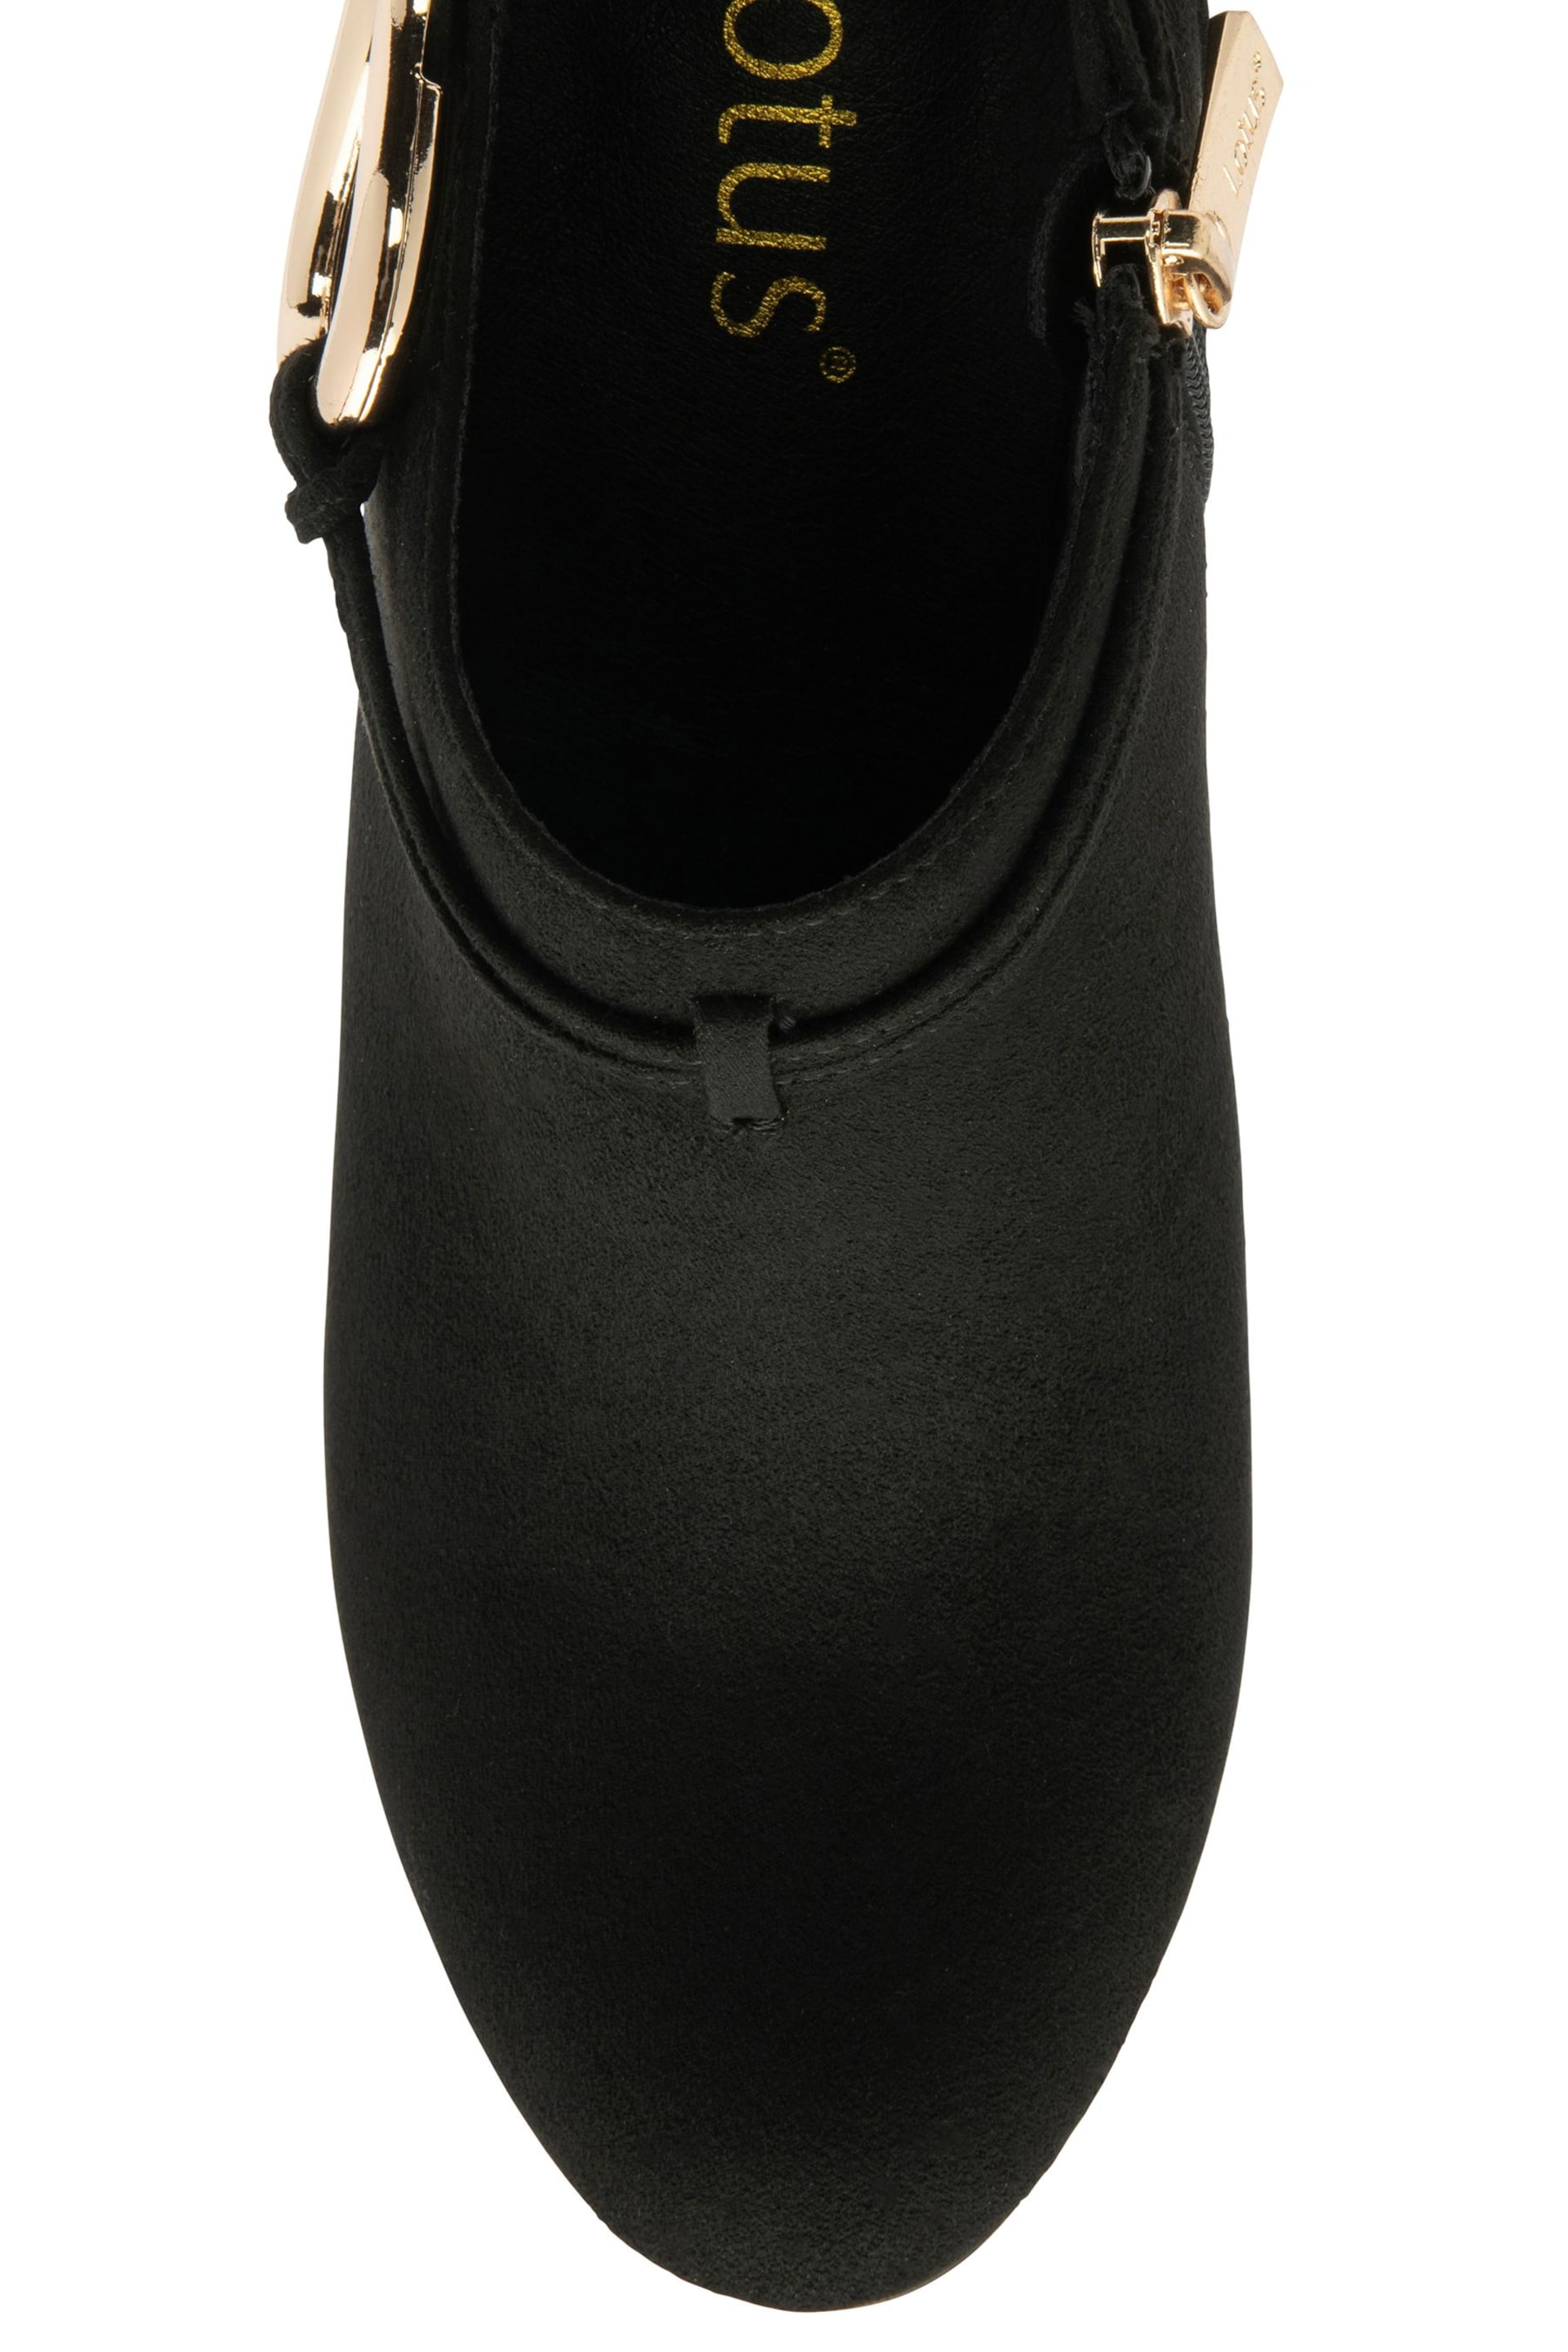 Lotus Black Microfibre Shoe Boots - Image 4 of 4